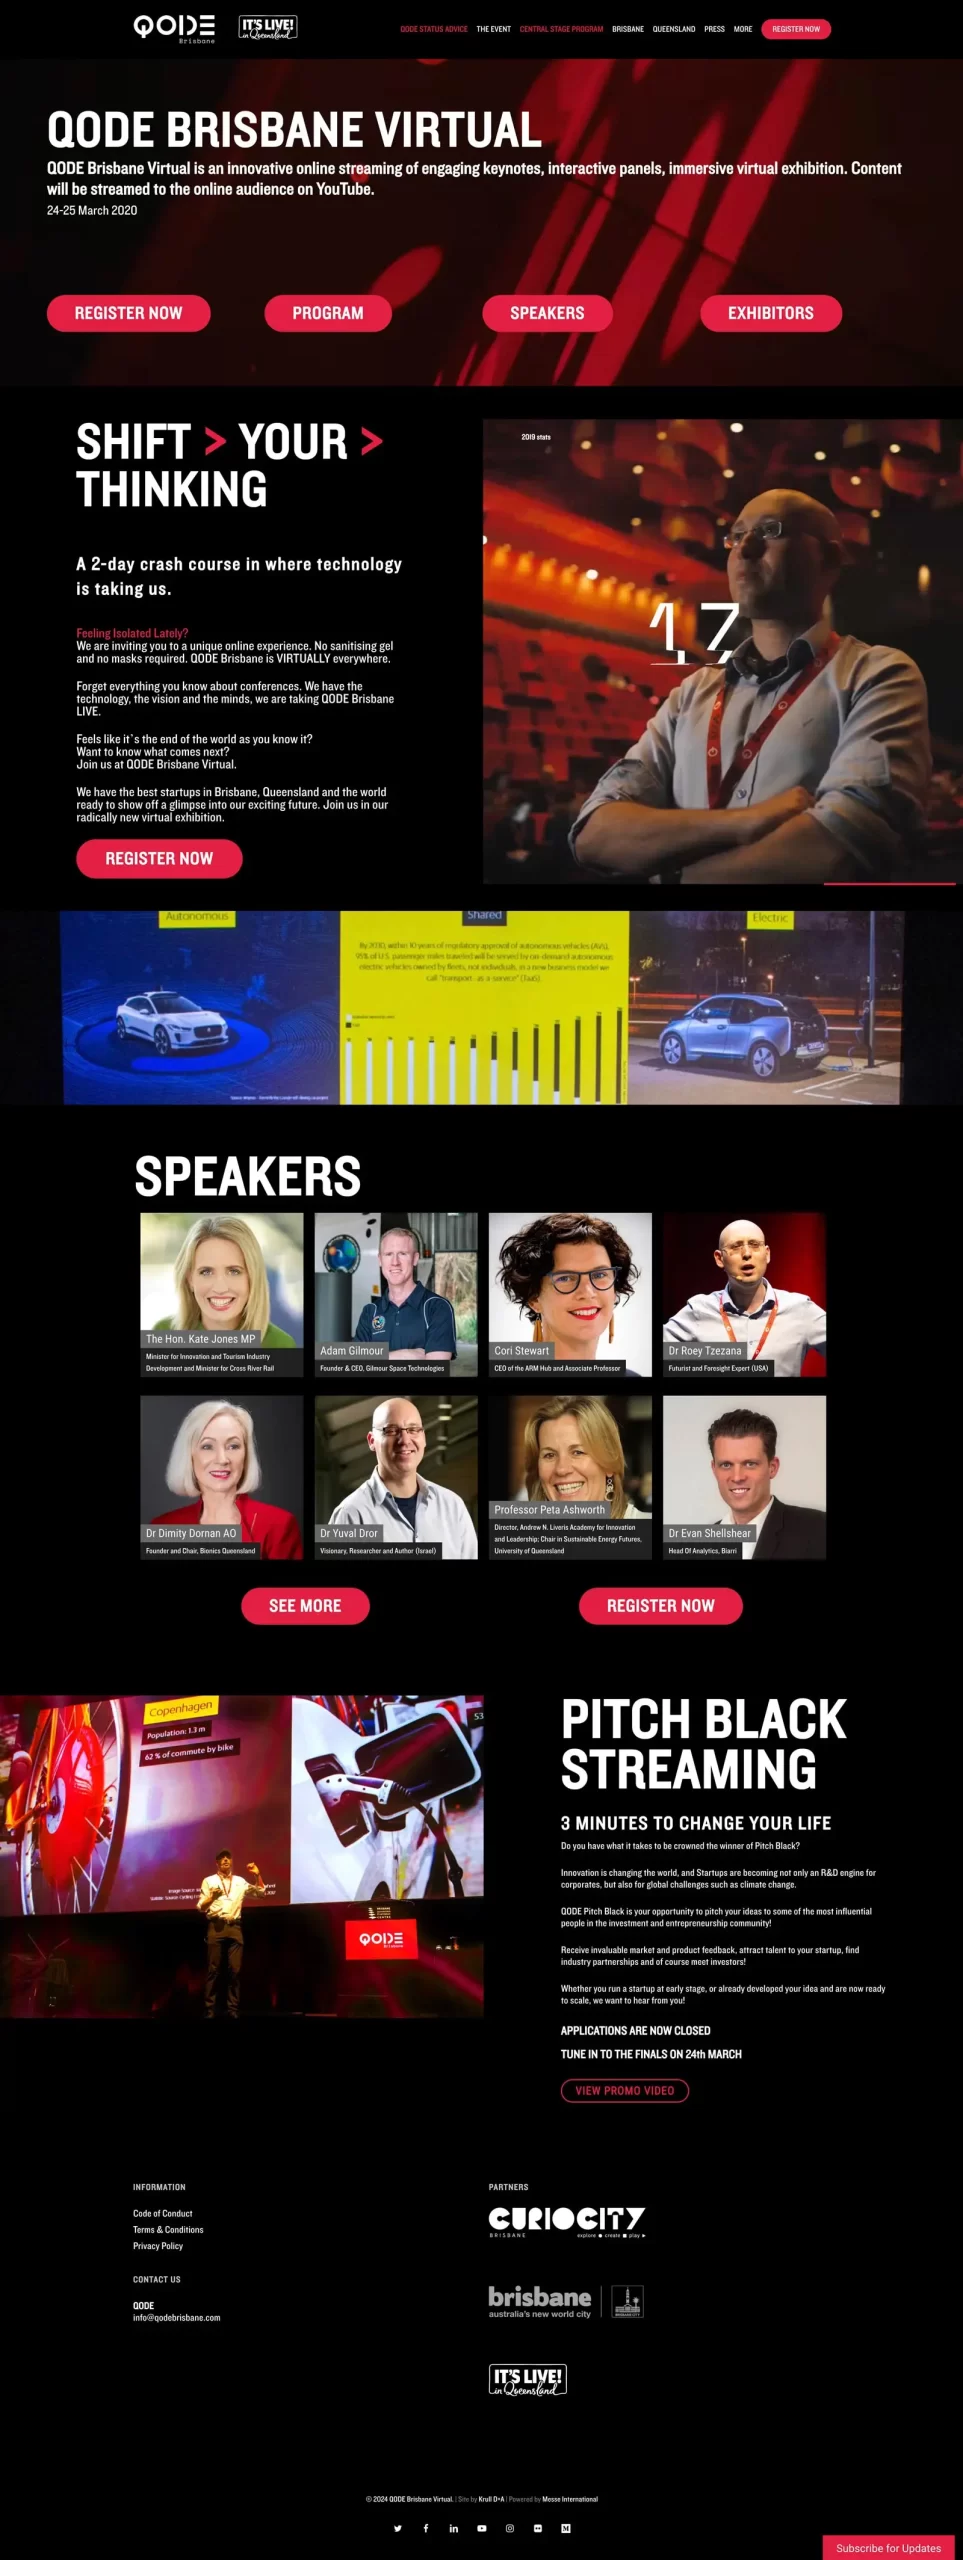 Promotional webpage for "QODE Brisbane Virtual" featuring event details, speaker profiles, registration information, and a streaming platform segment.